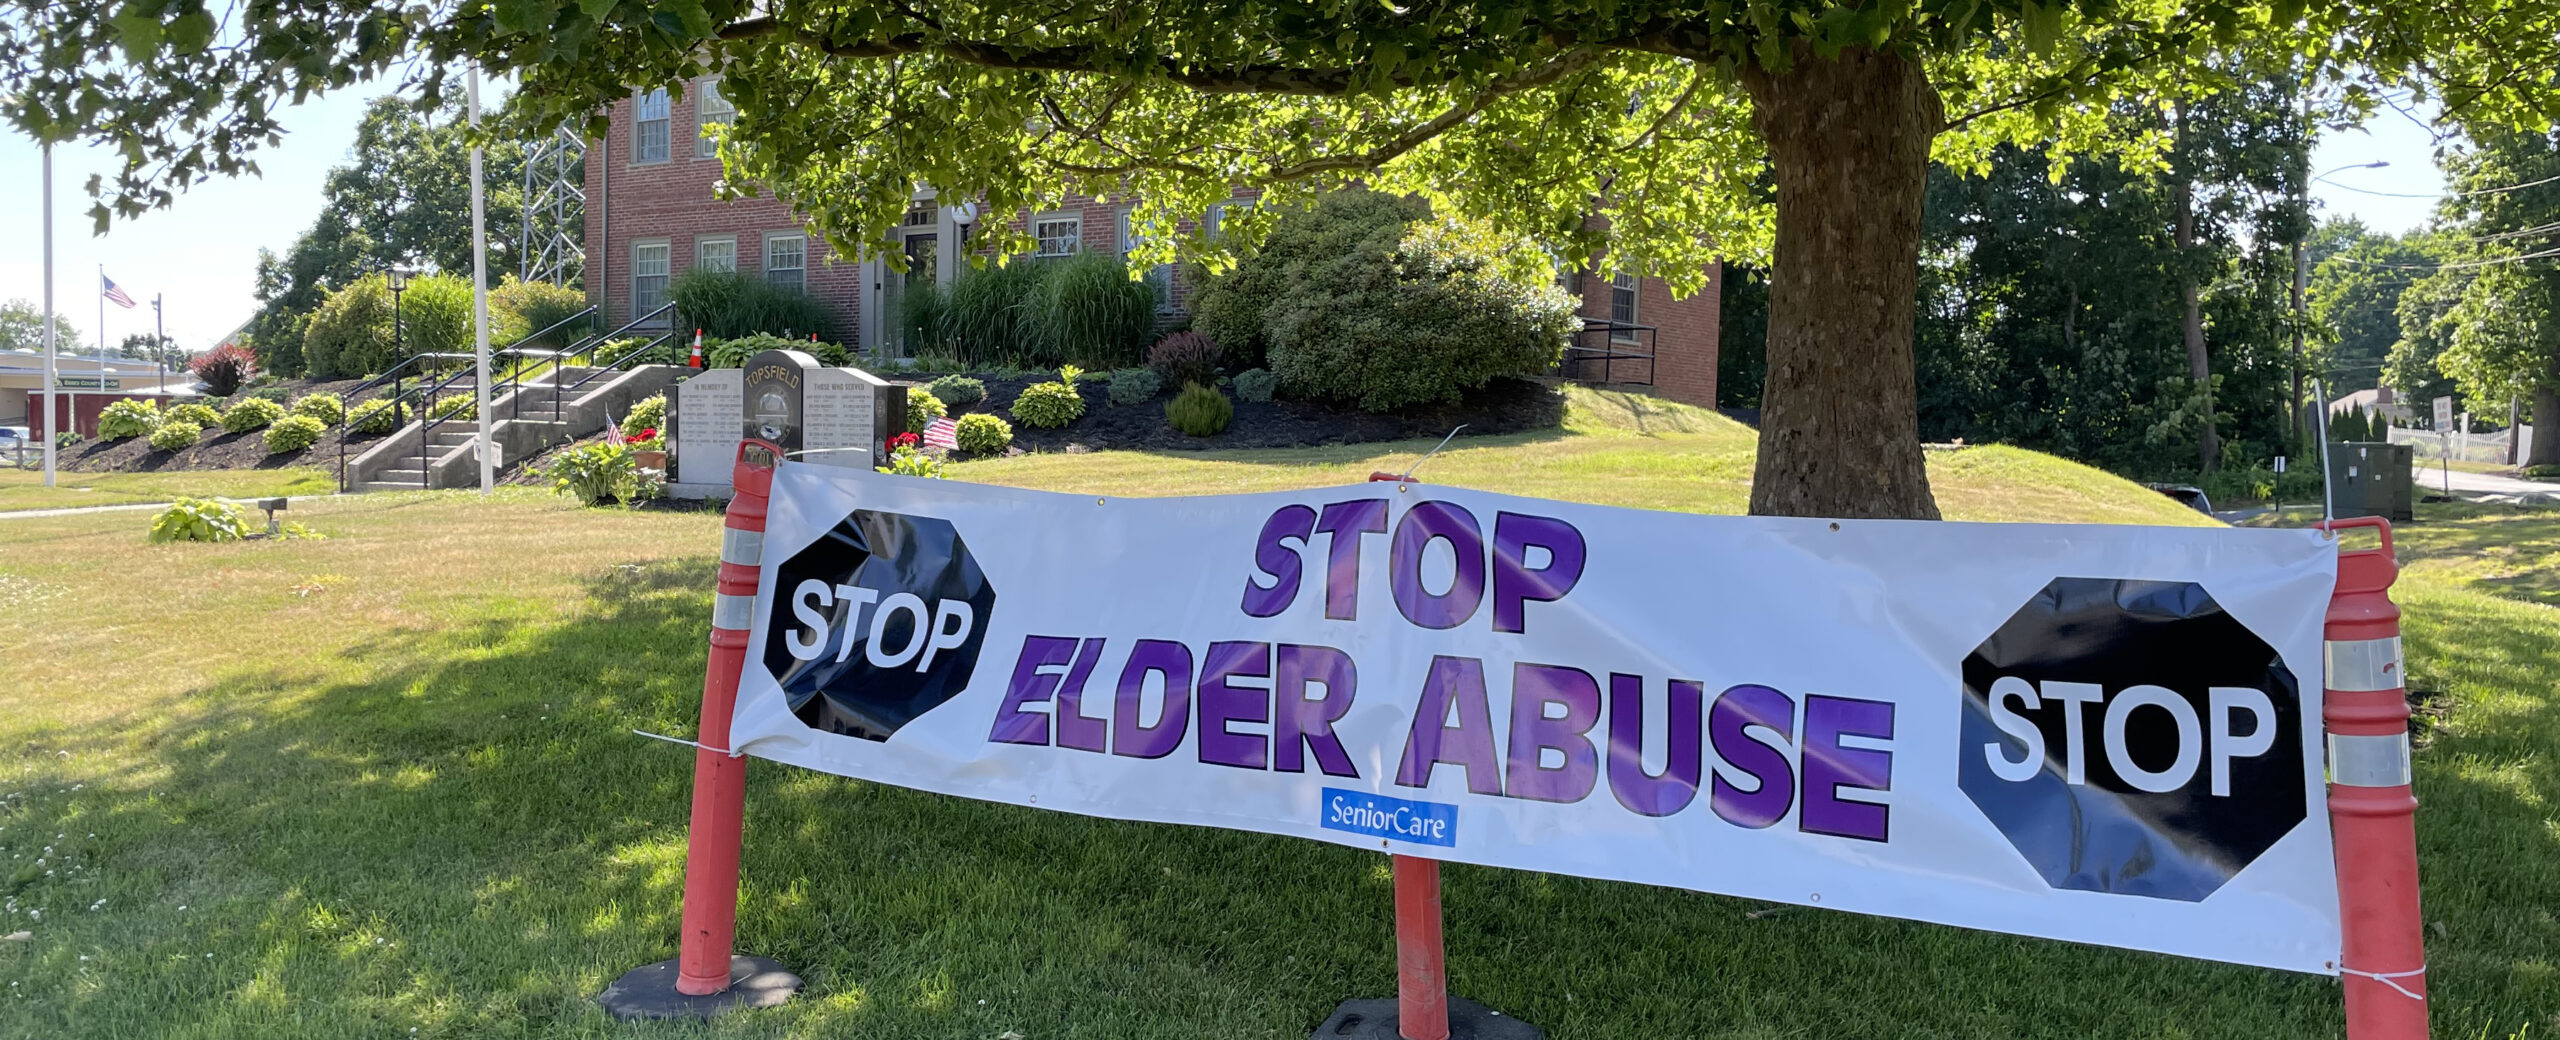 elder abuse awareness banner in Topsfield